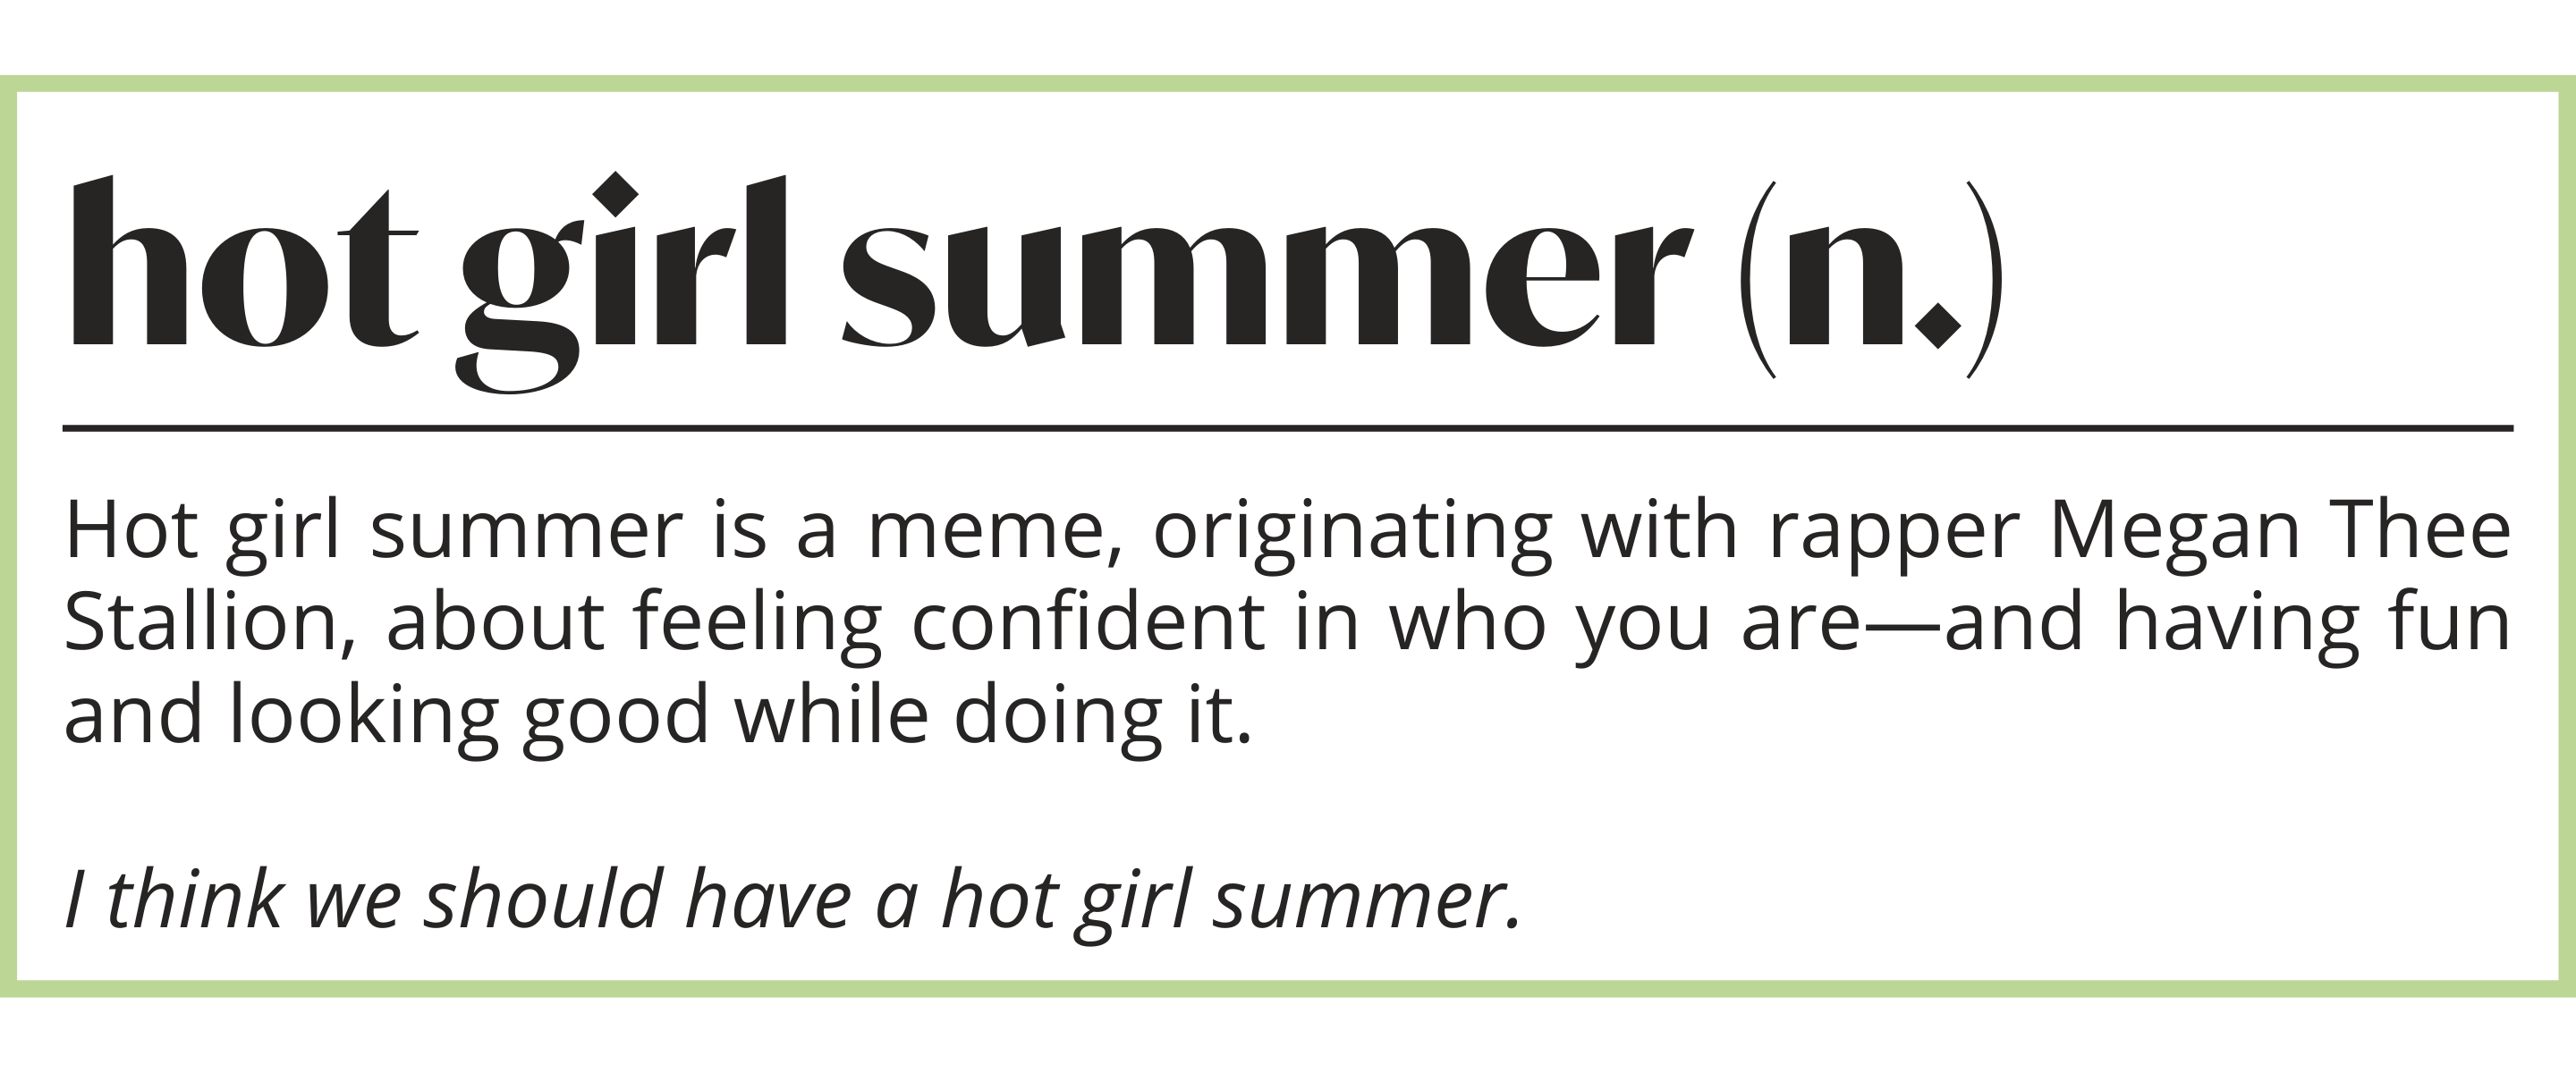 hot girl summer (n.) (2).png